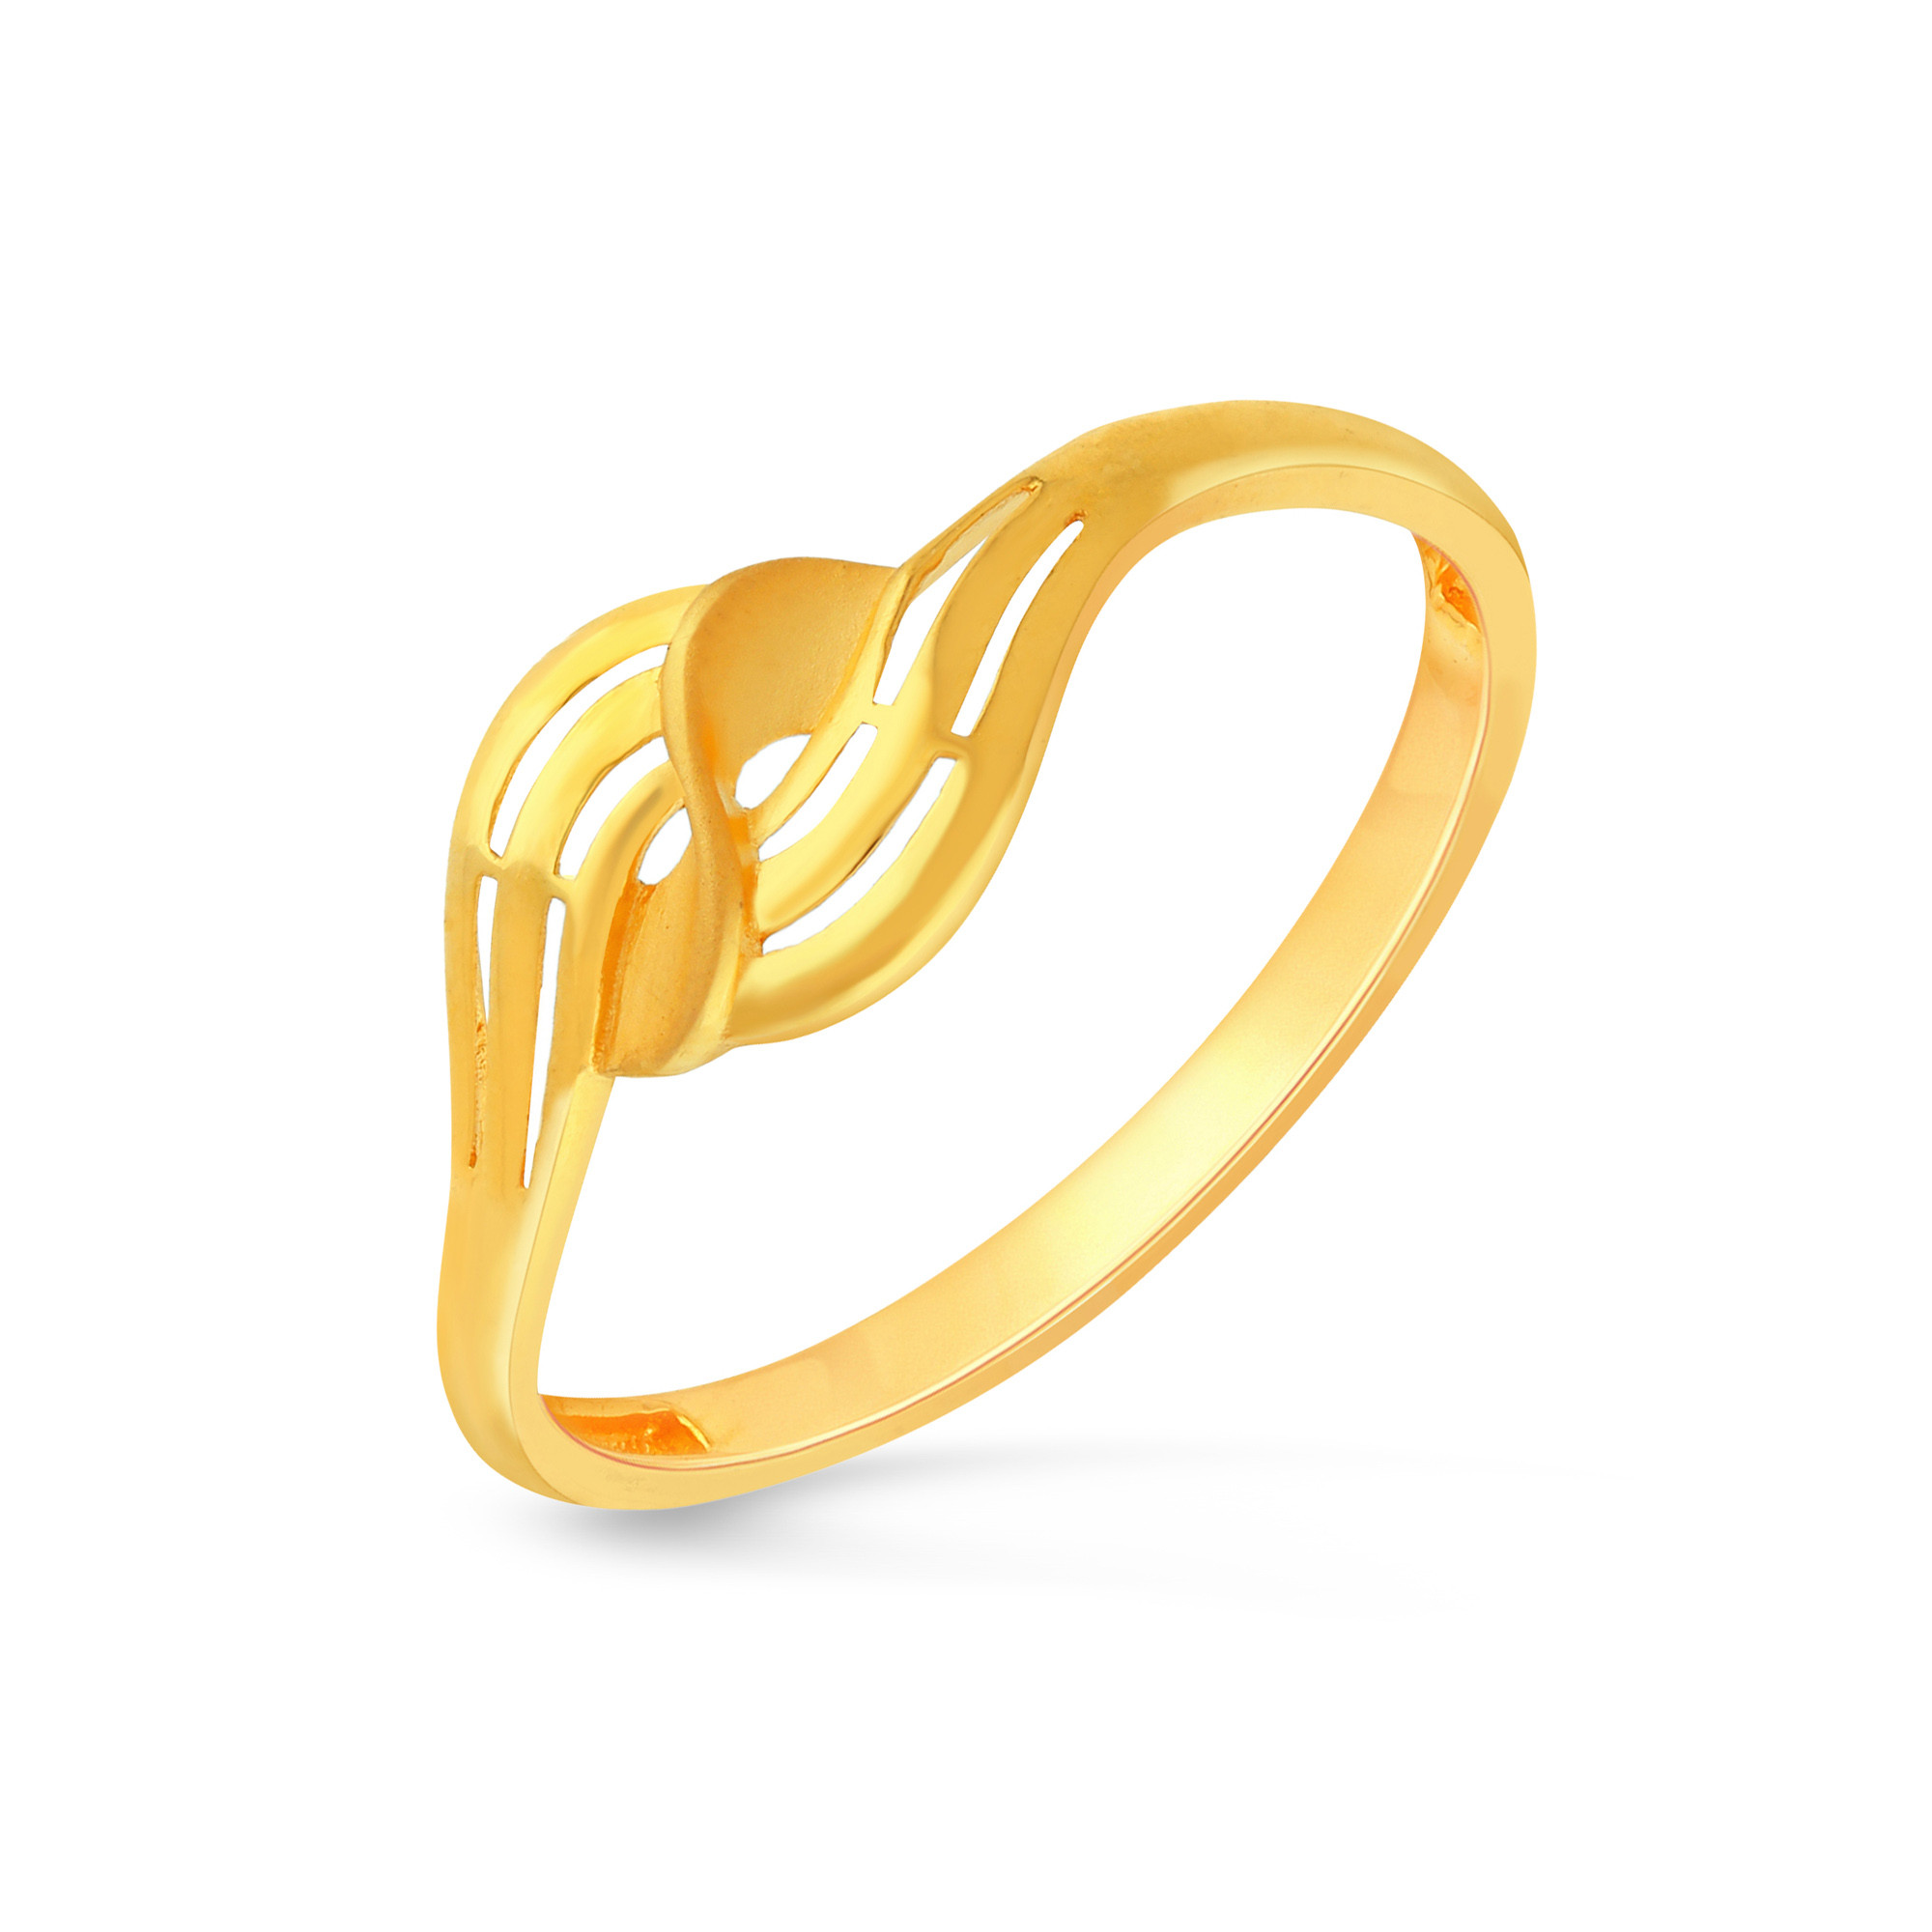 Malabar Gold and Diamonds 22k (916) Yellow Gold Ring for Women : Amazon.in:  Fashion